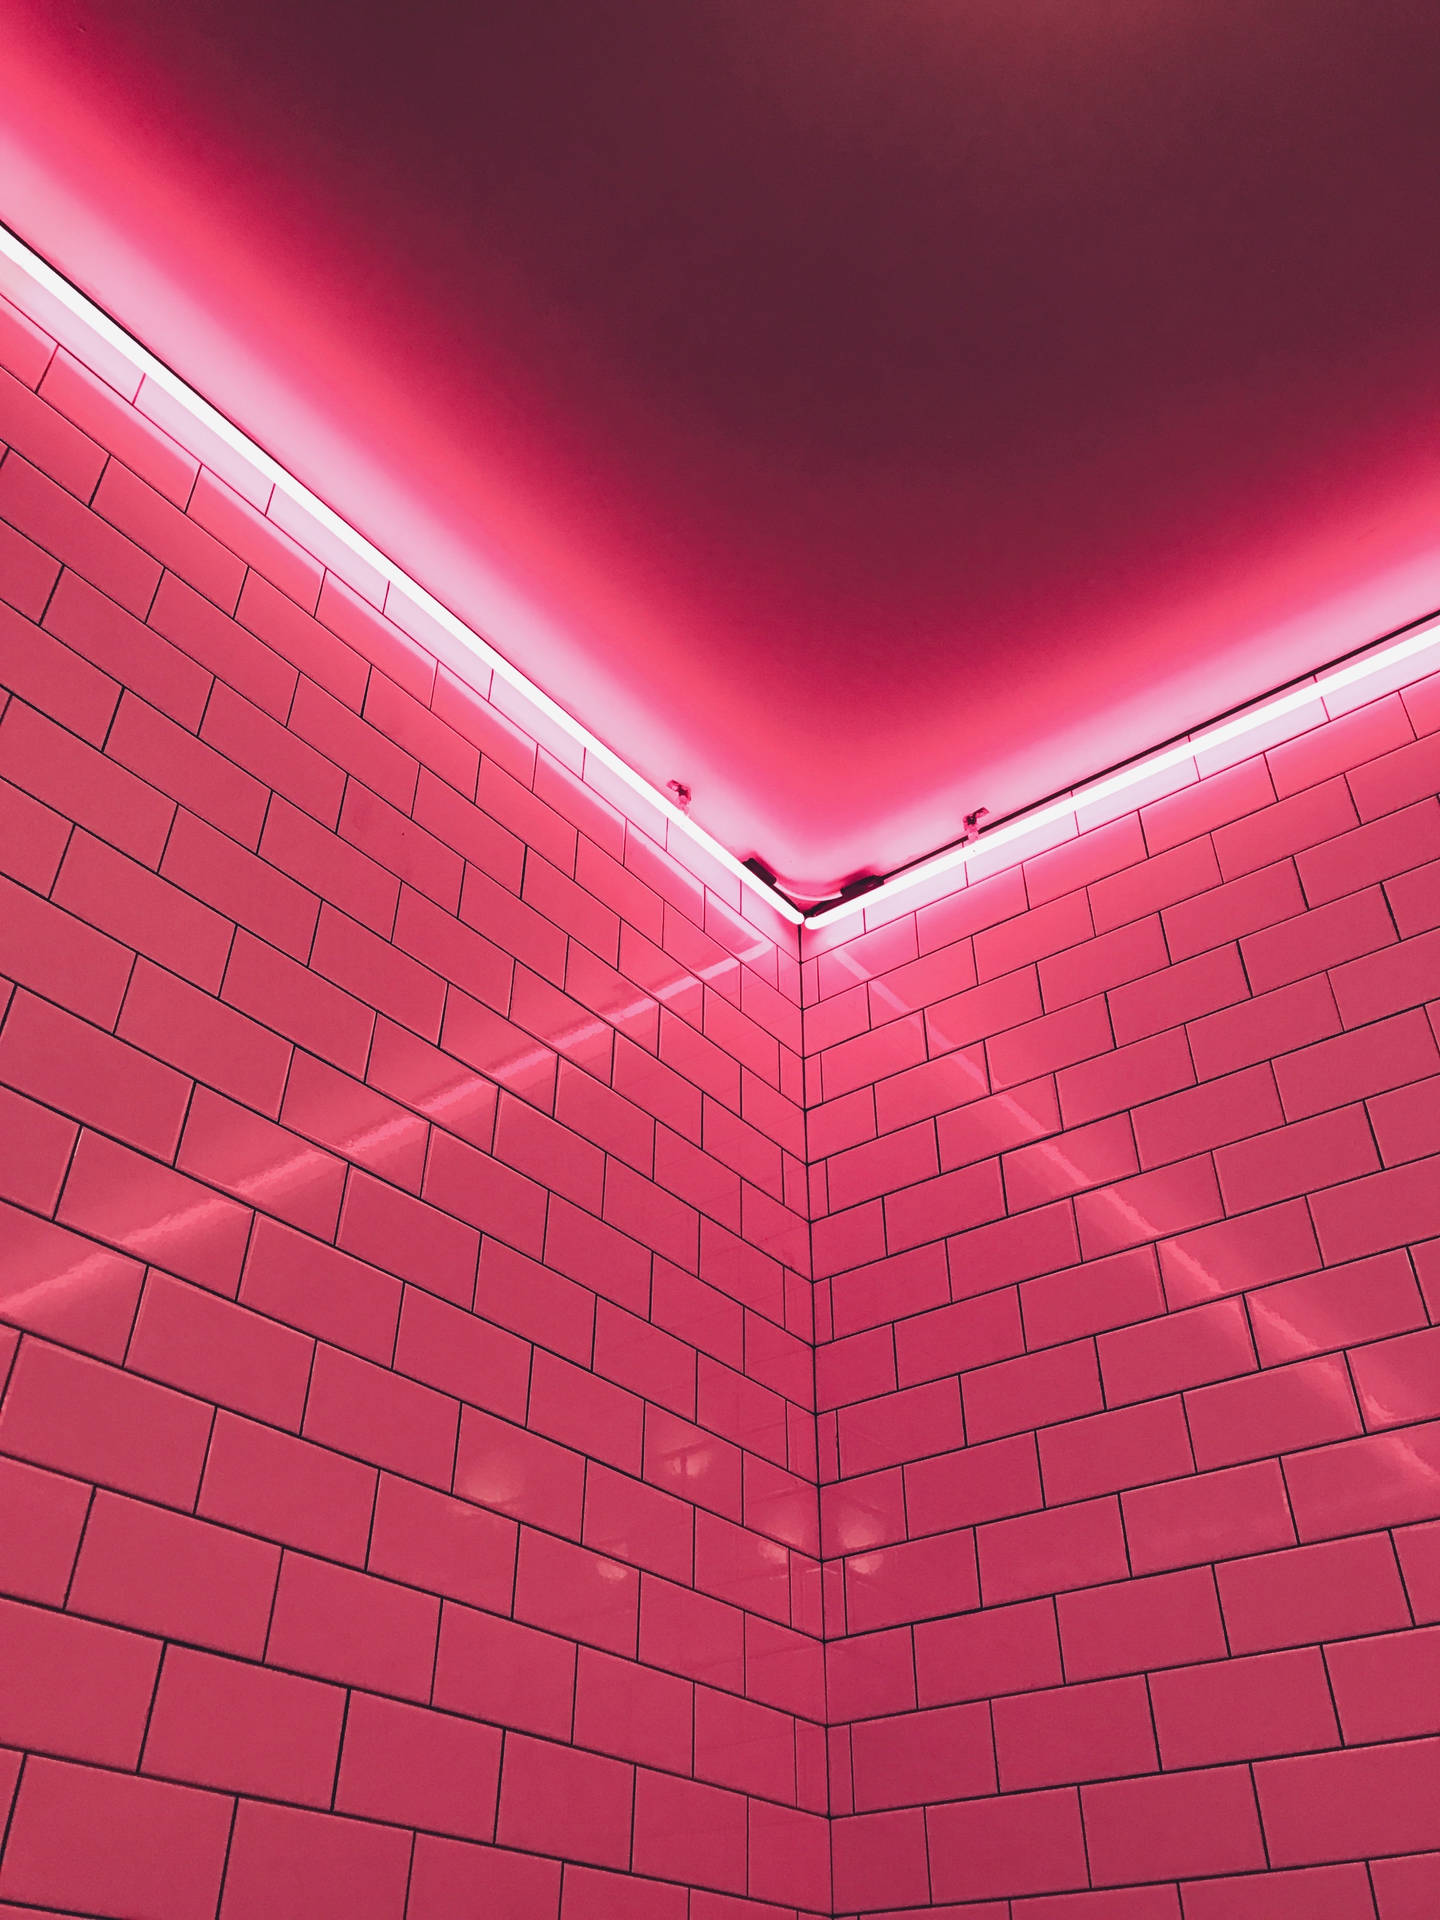 Lys op dit rum med LED-strips Wallpaper